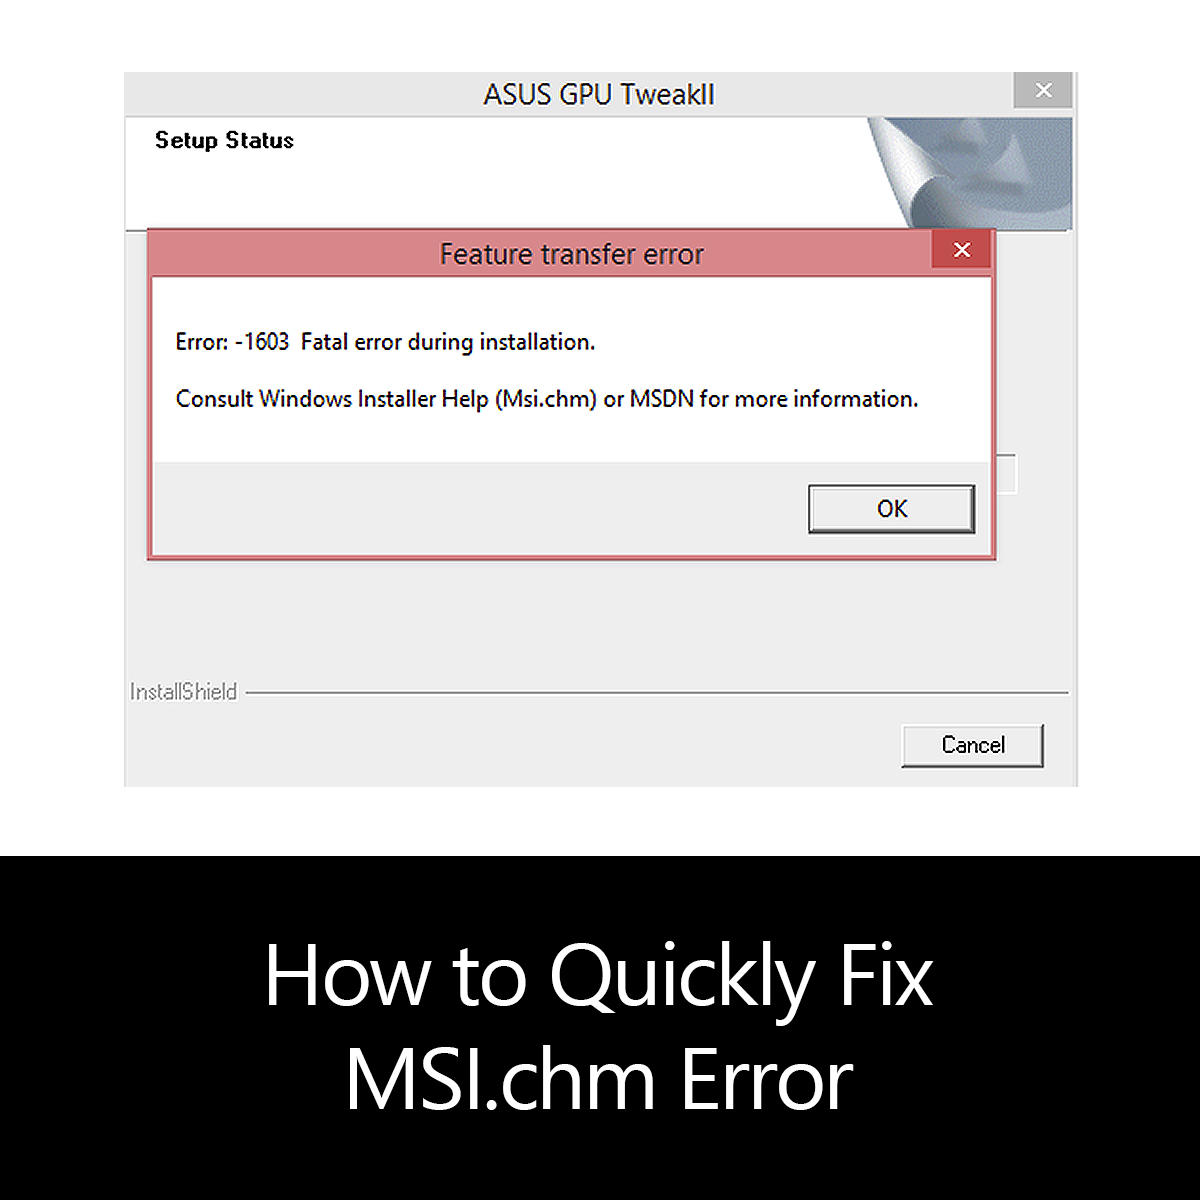 windows fitter msi.chm error